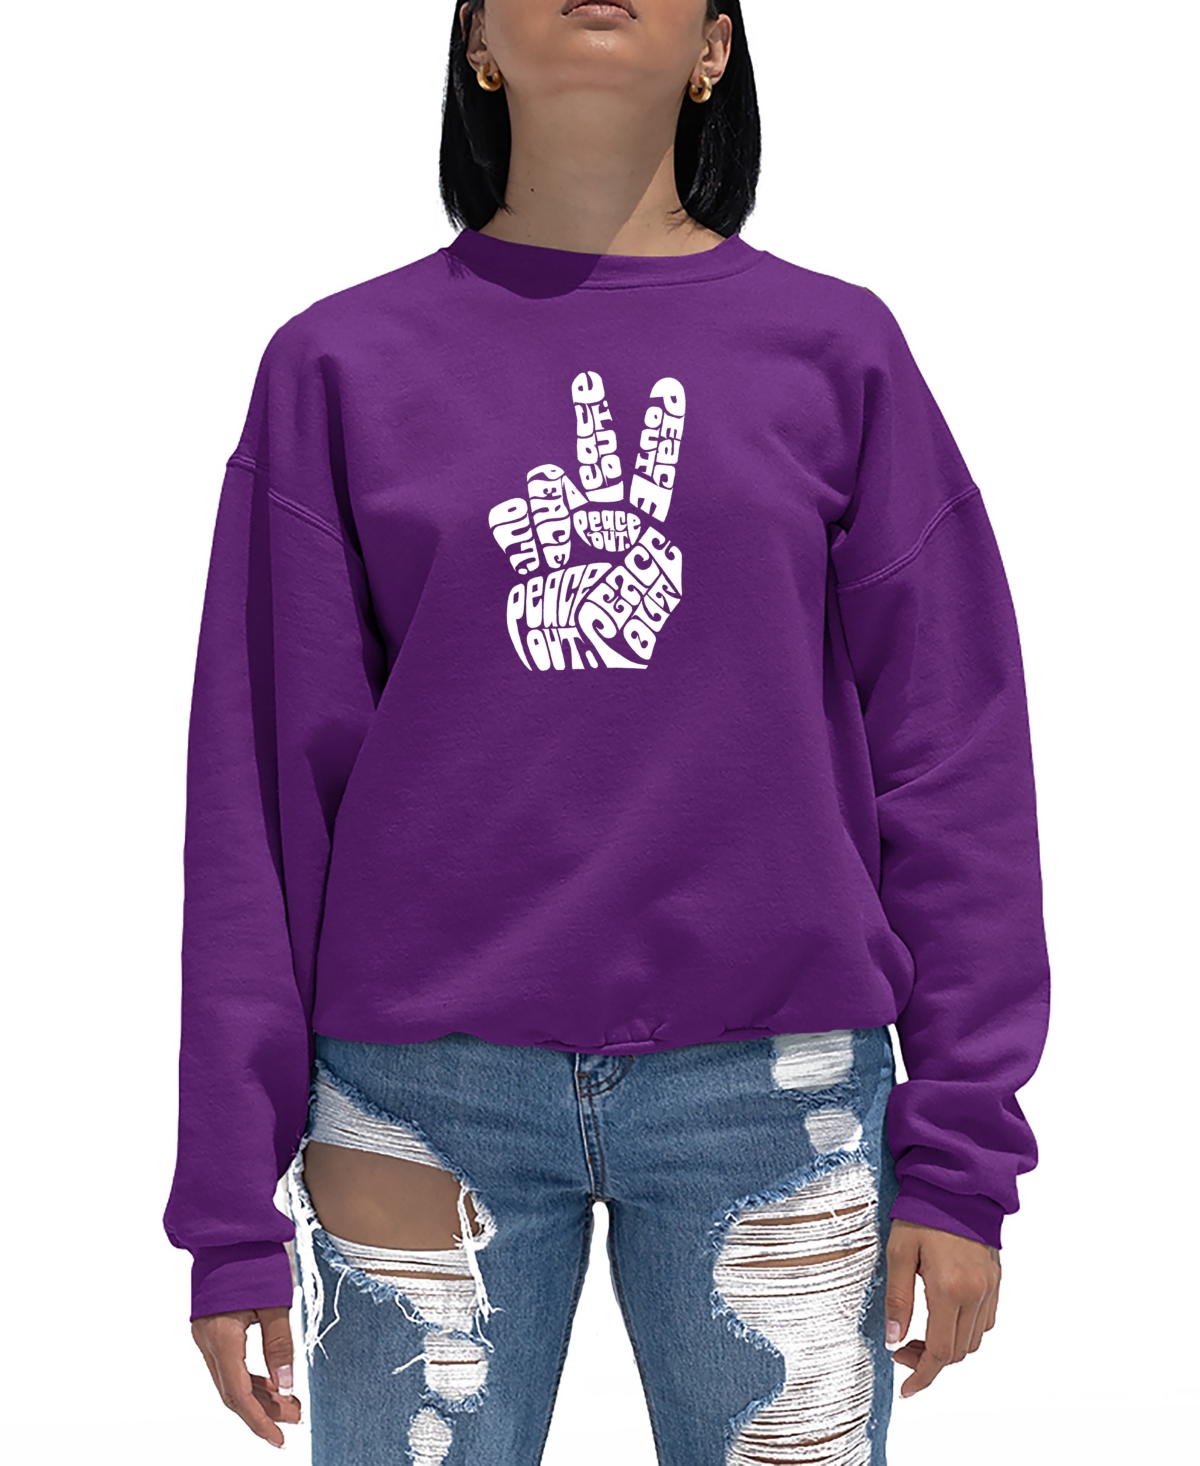 Women's Crewneck Word Art Peace Out Sweatshirt Top - Purple